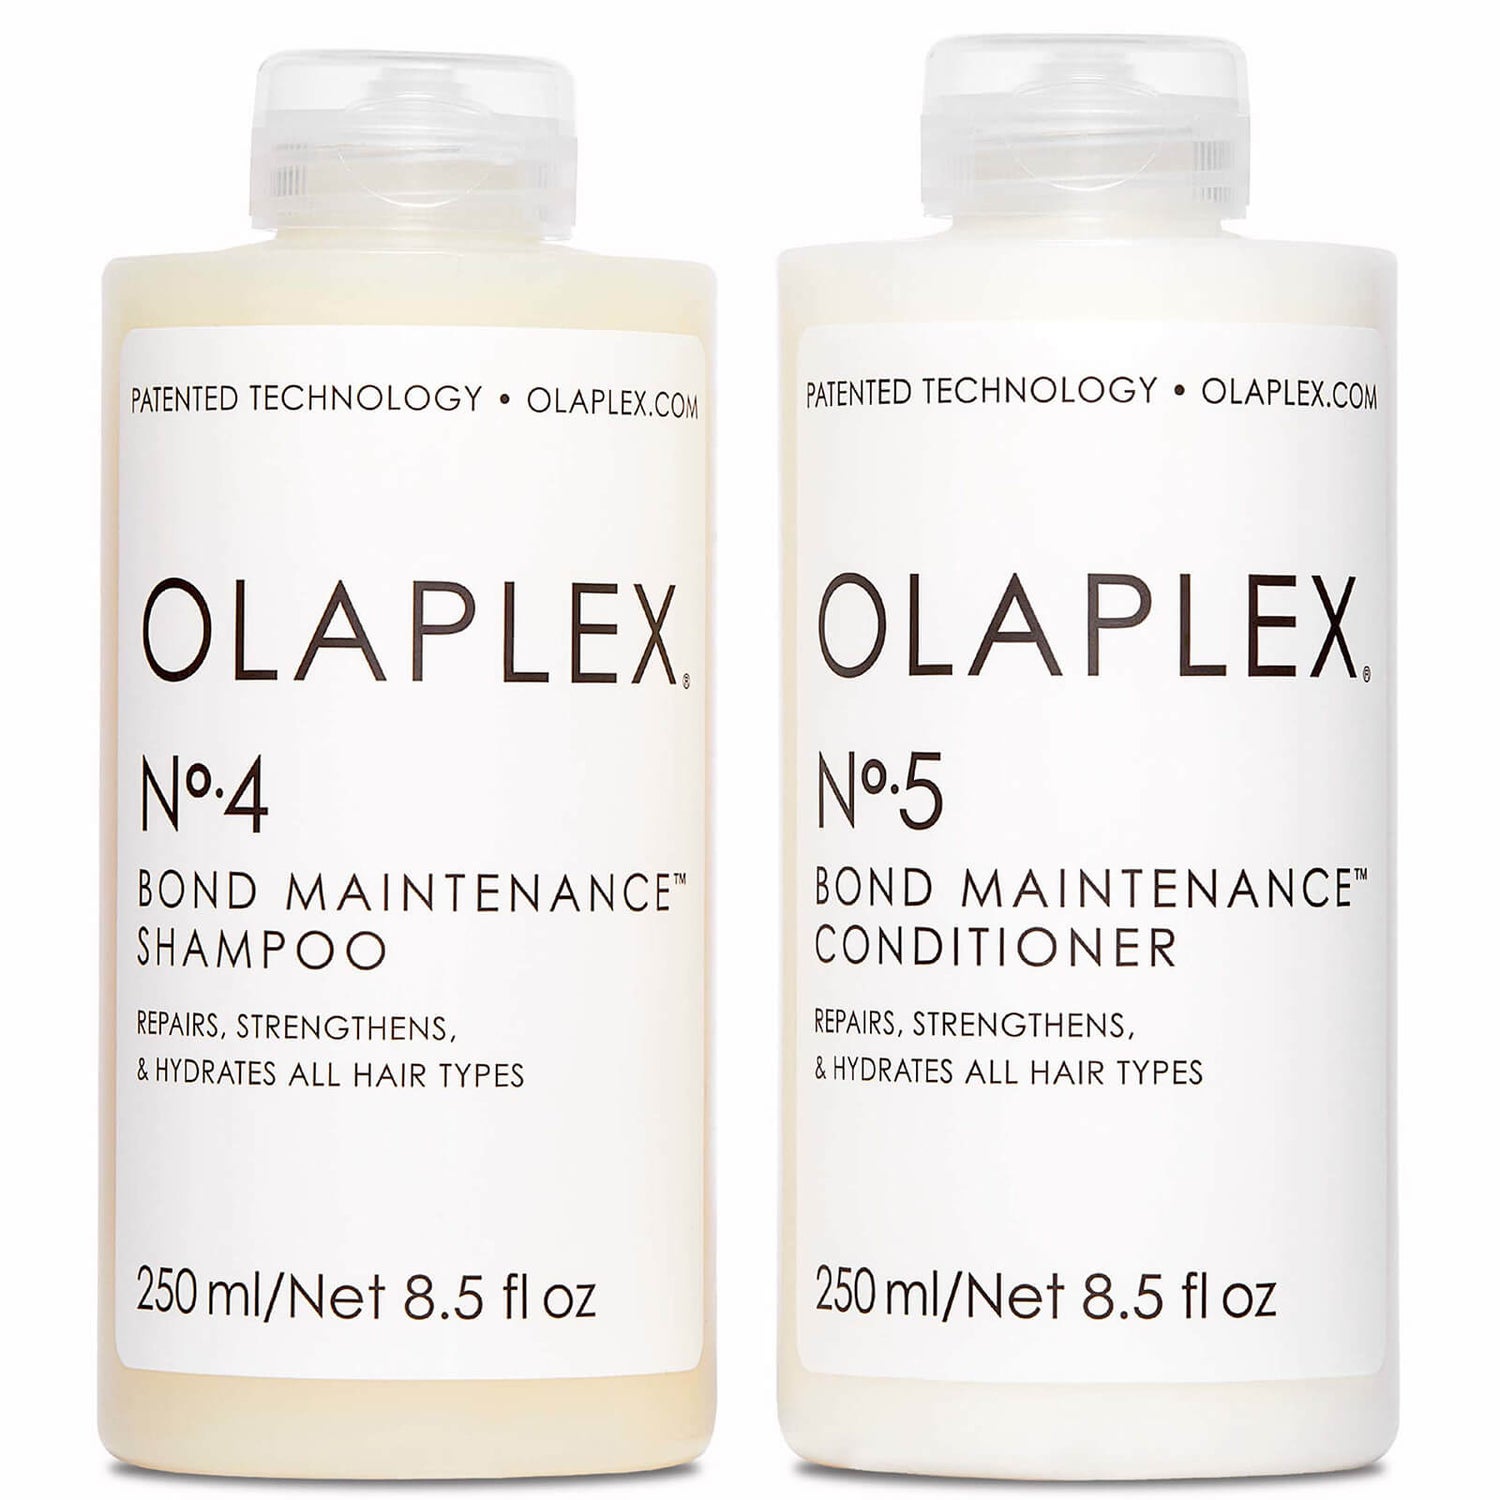 Olaplex Shampoo and Conditioner Bundle - LOOKFANTASTIC